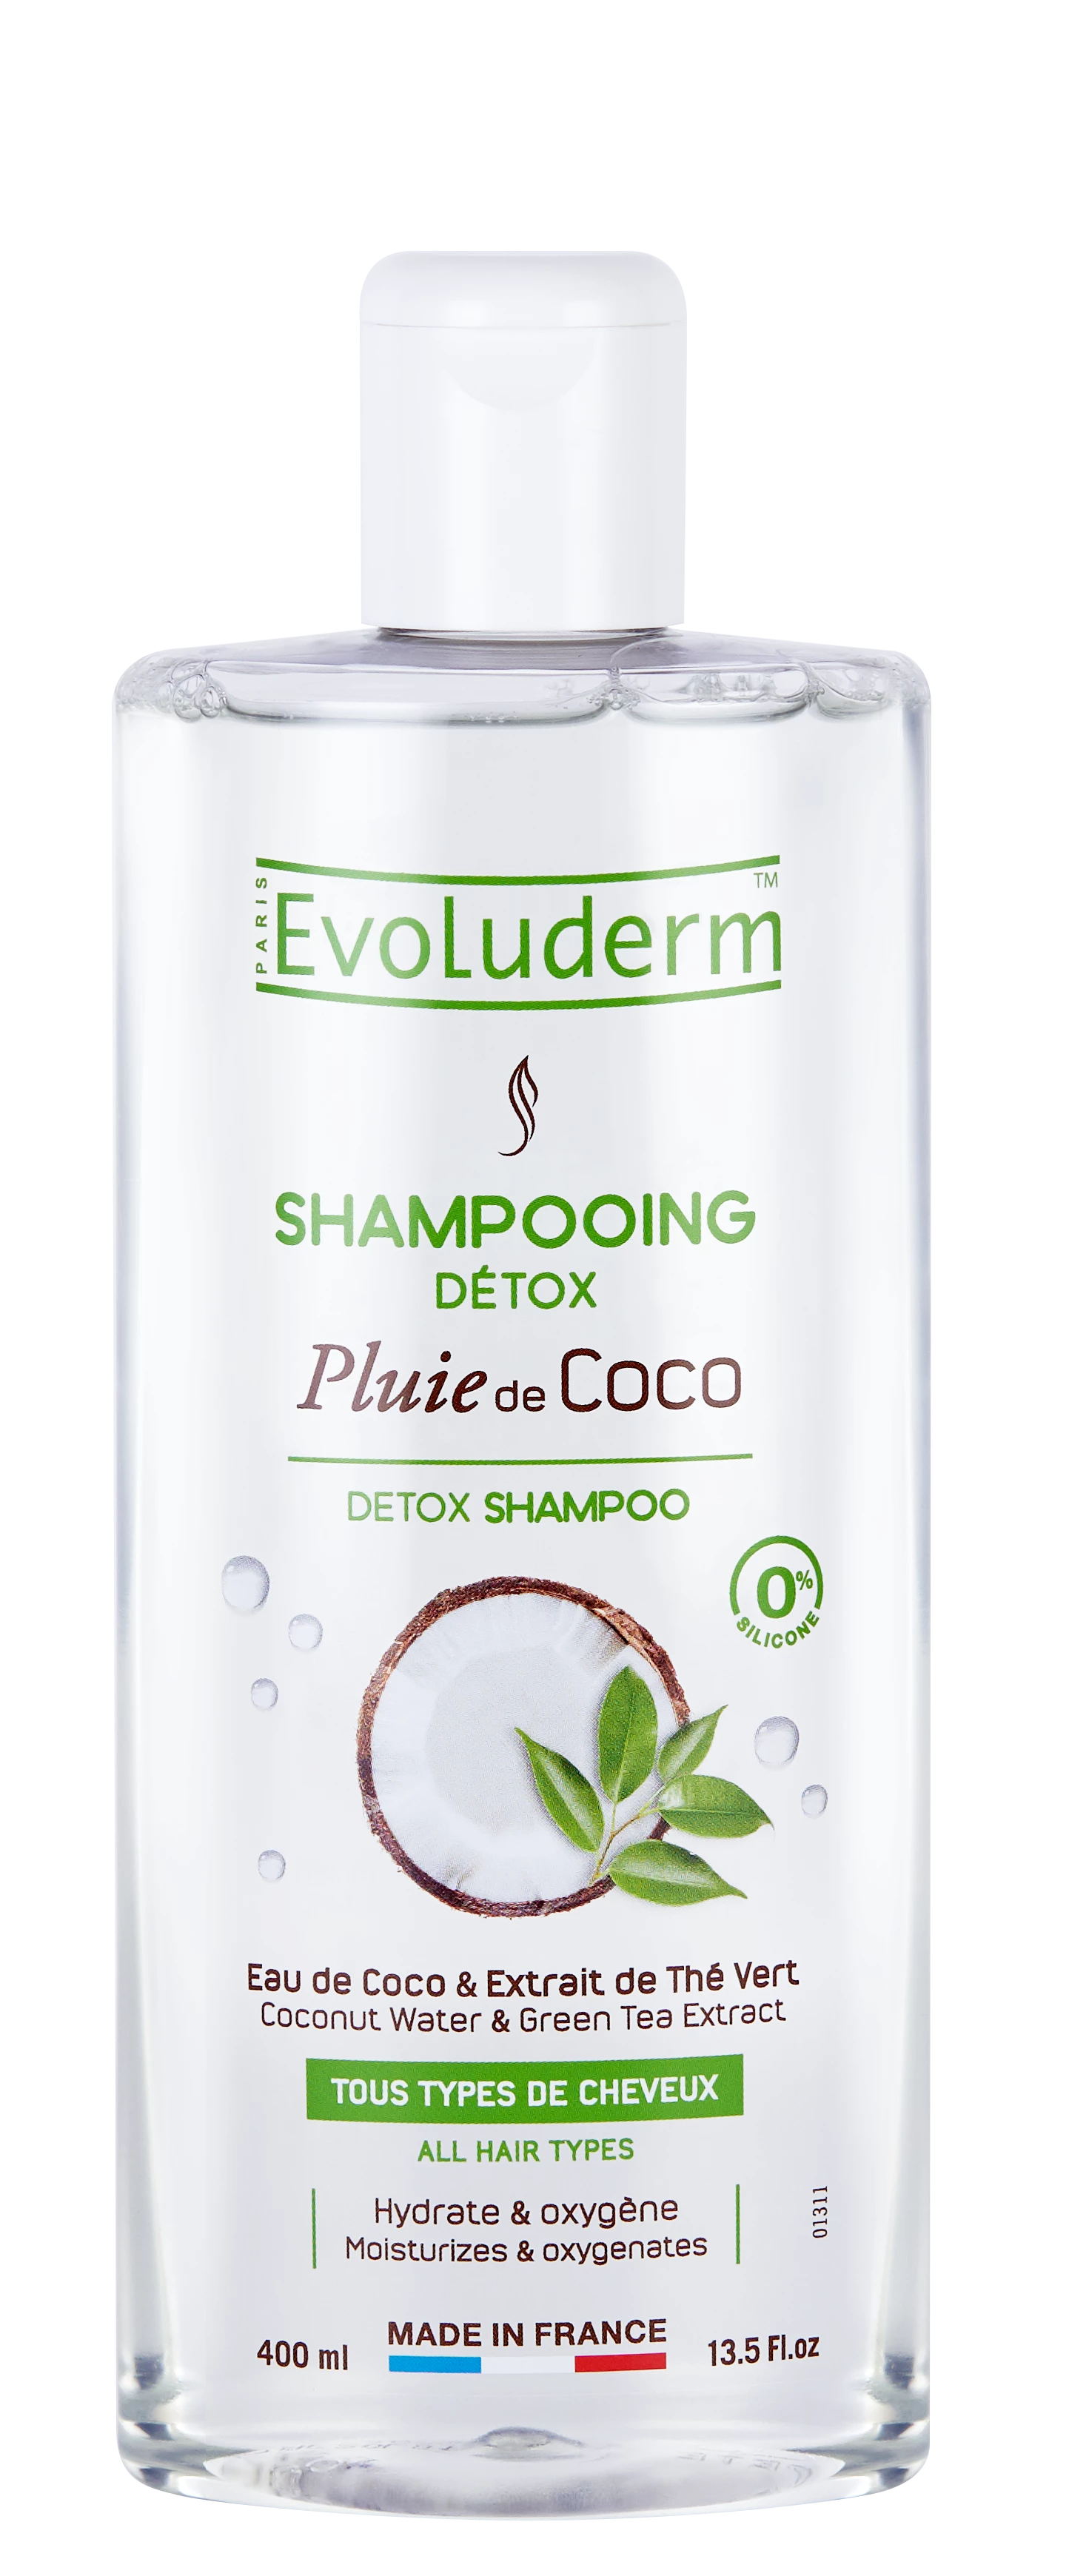 Kokosnuss-Regen-Detox-Shampoo 400 ml - EVOLUDERM